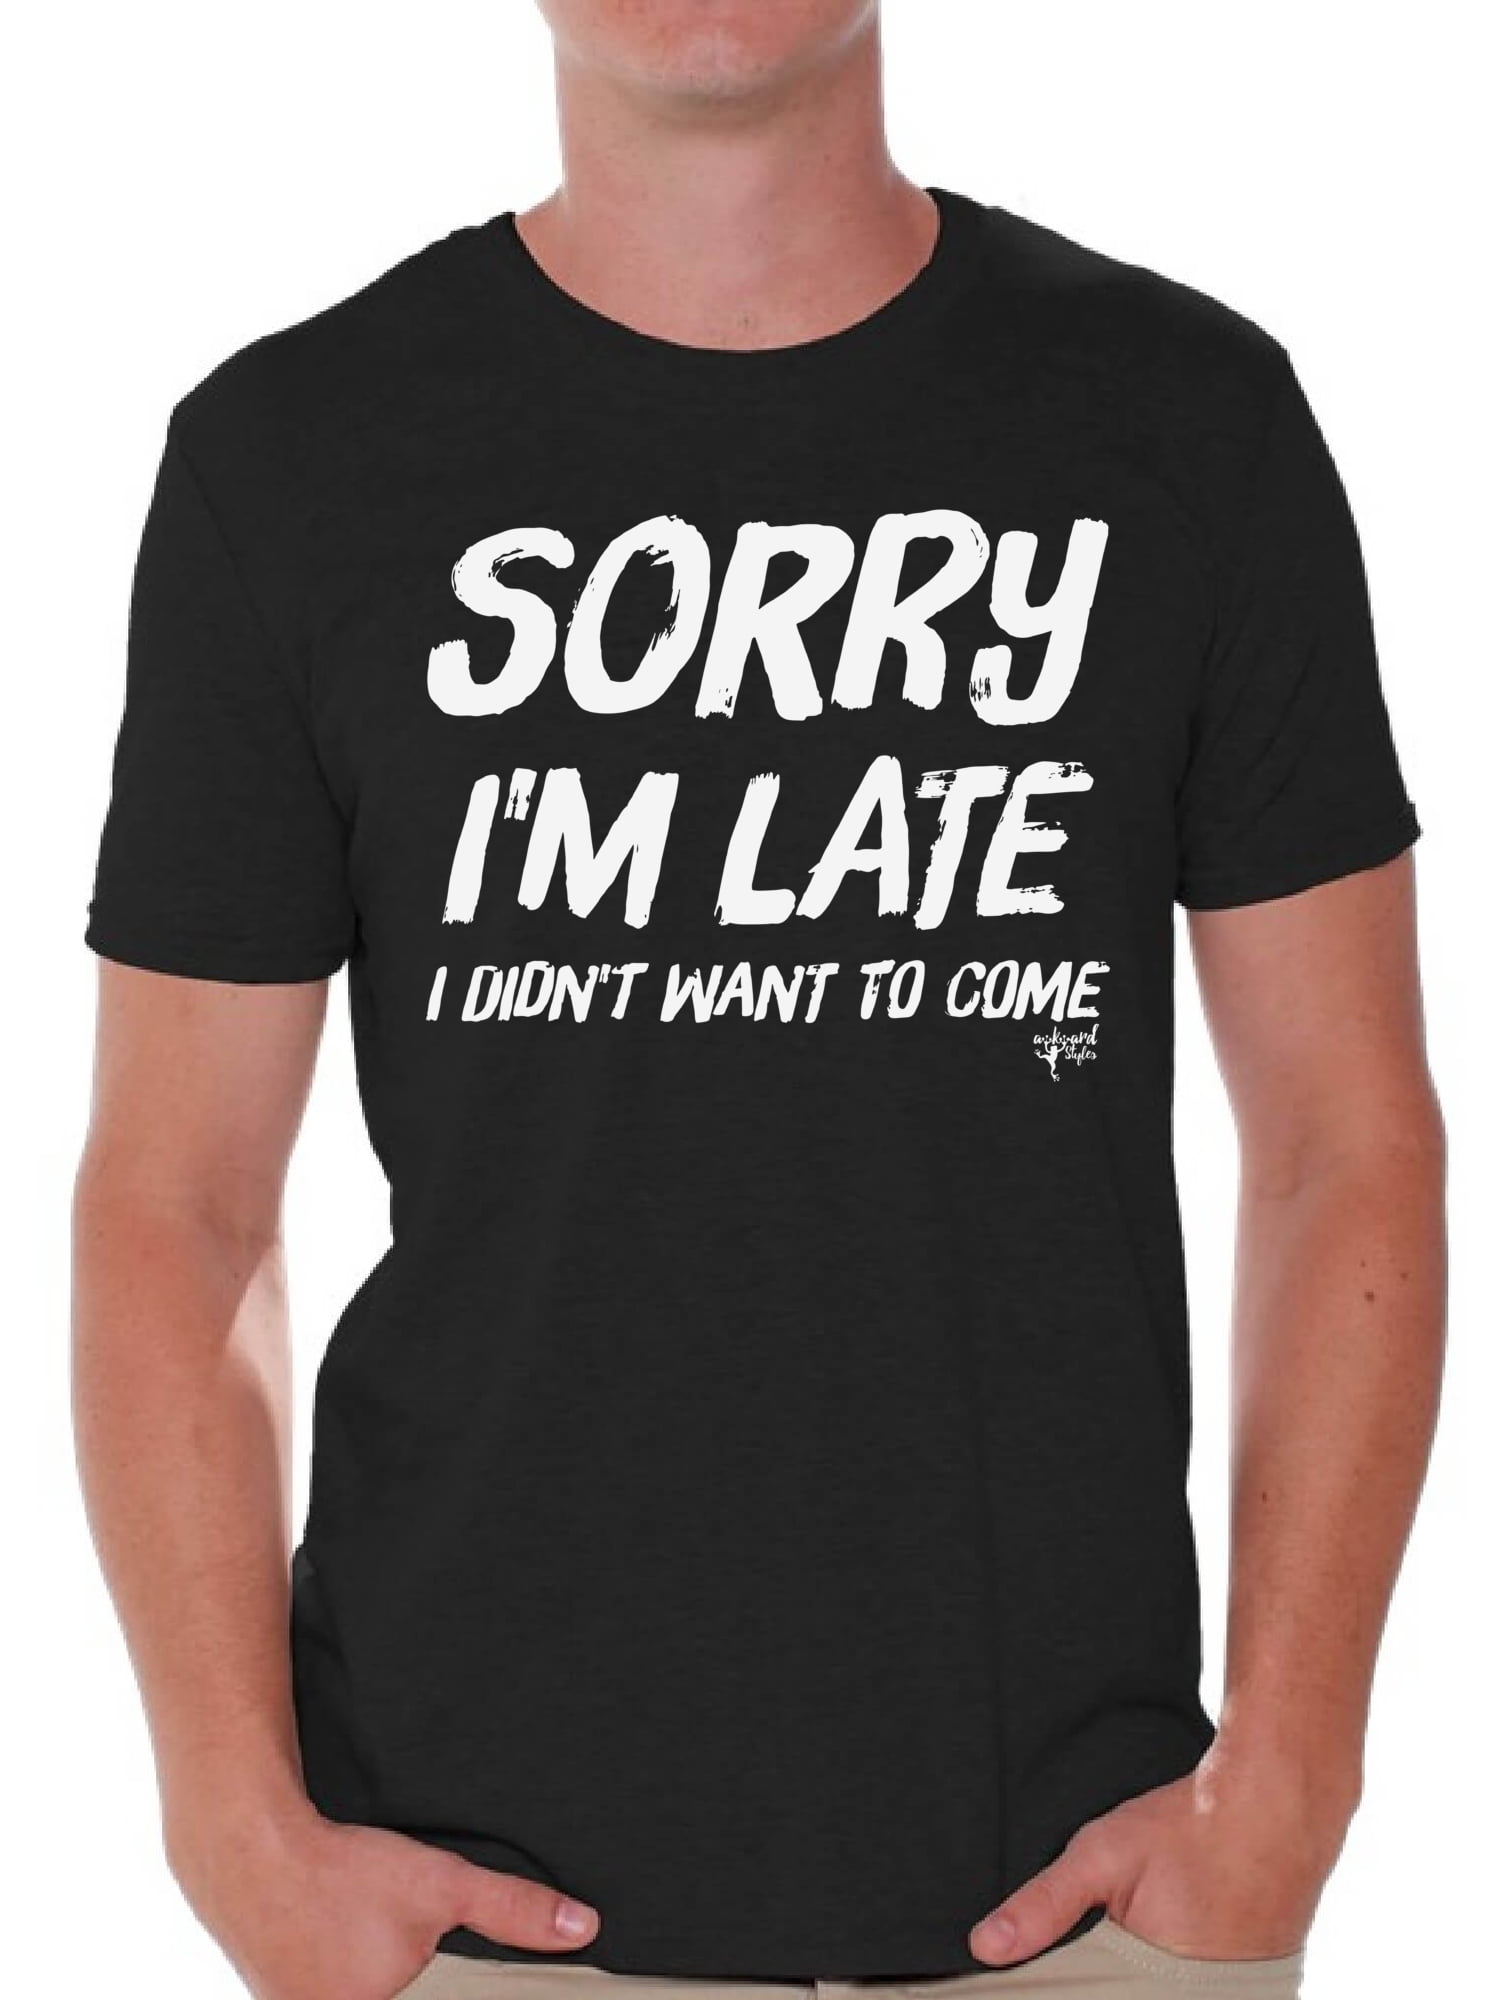 Awkward Styles Mens Humor Shirts Mens Humor Graphic Tees Im Late Lazy